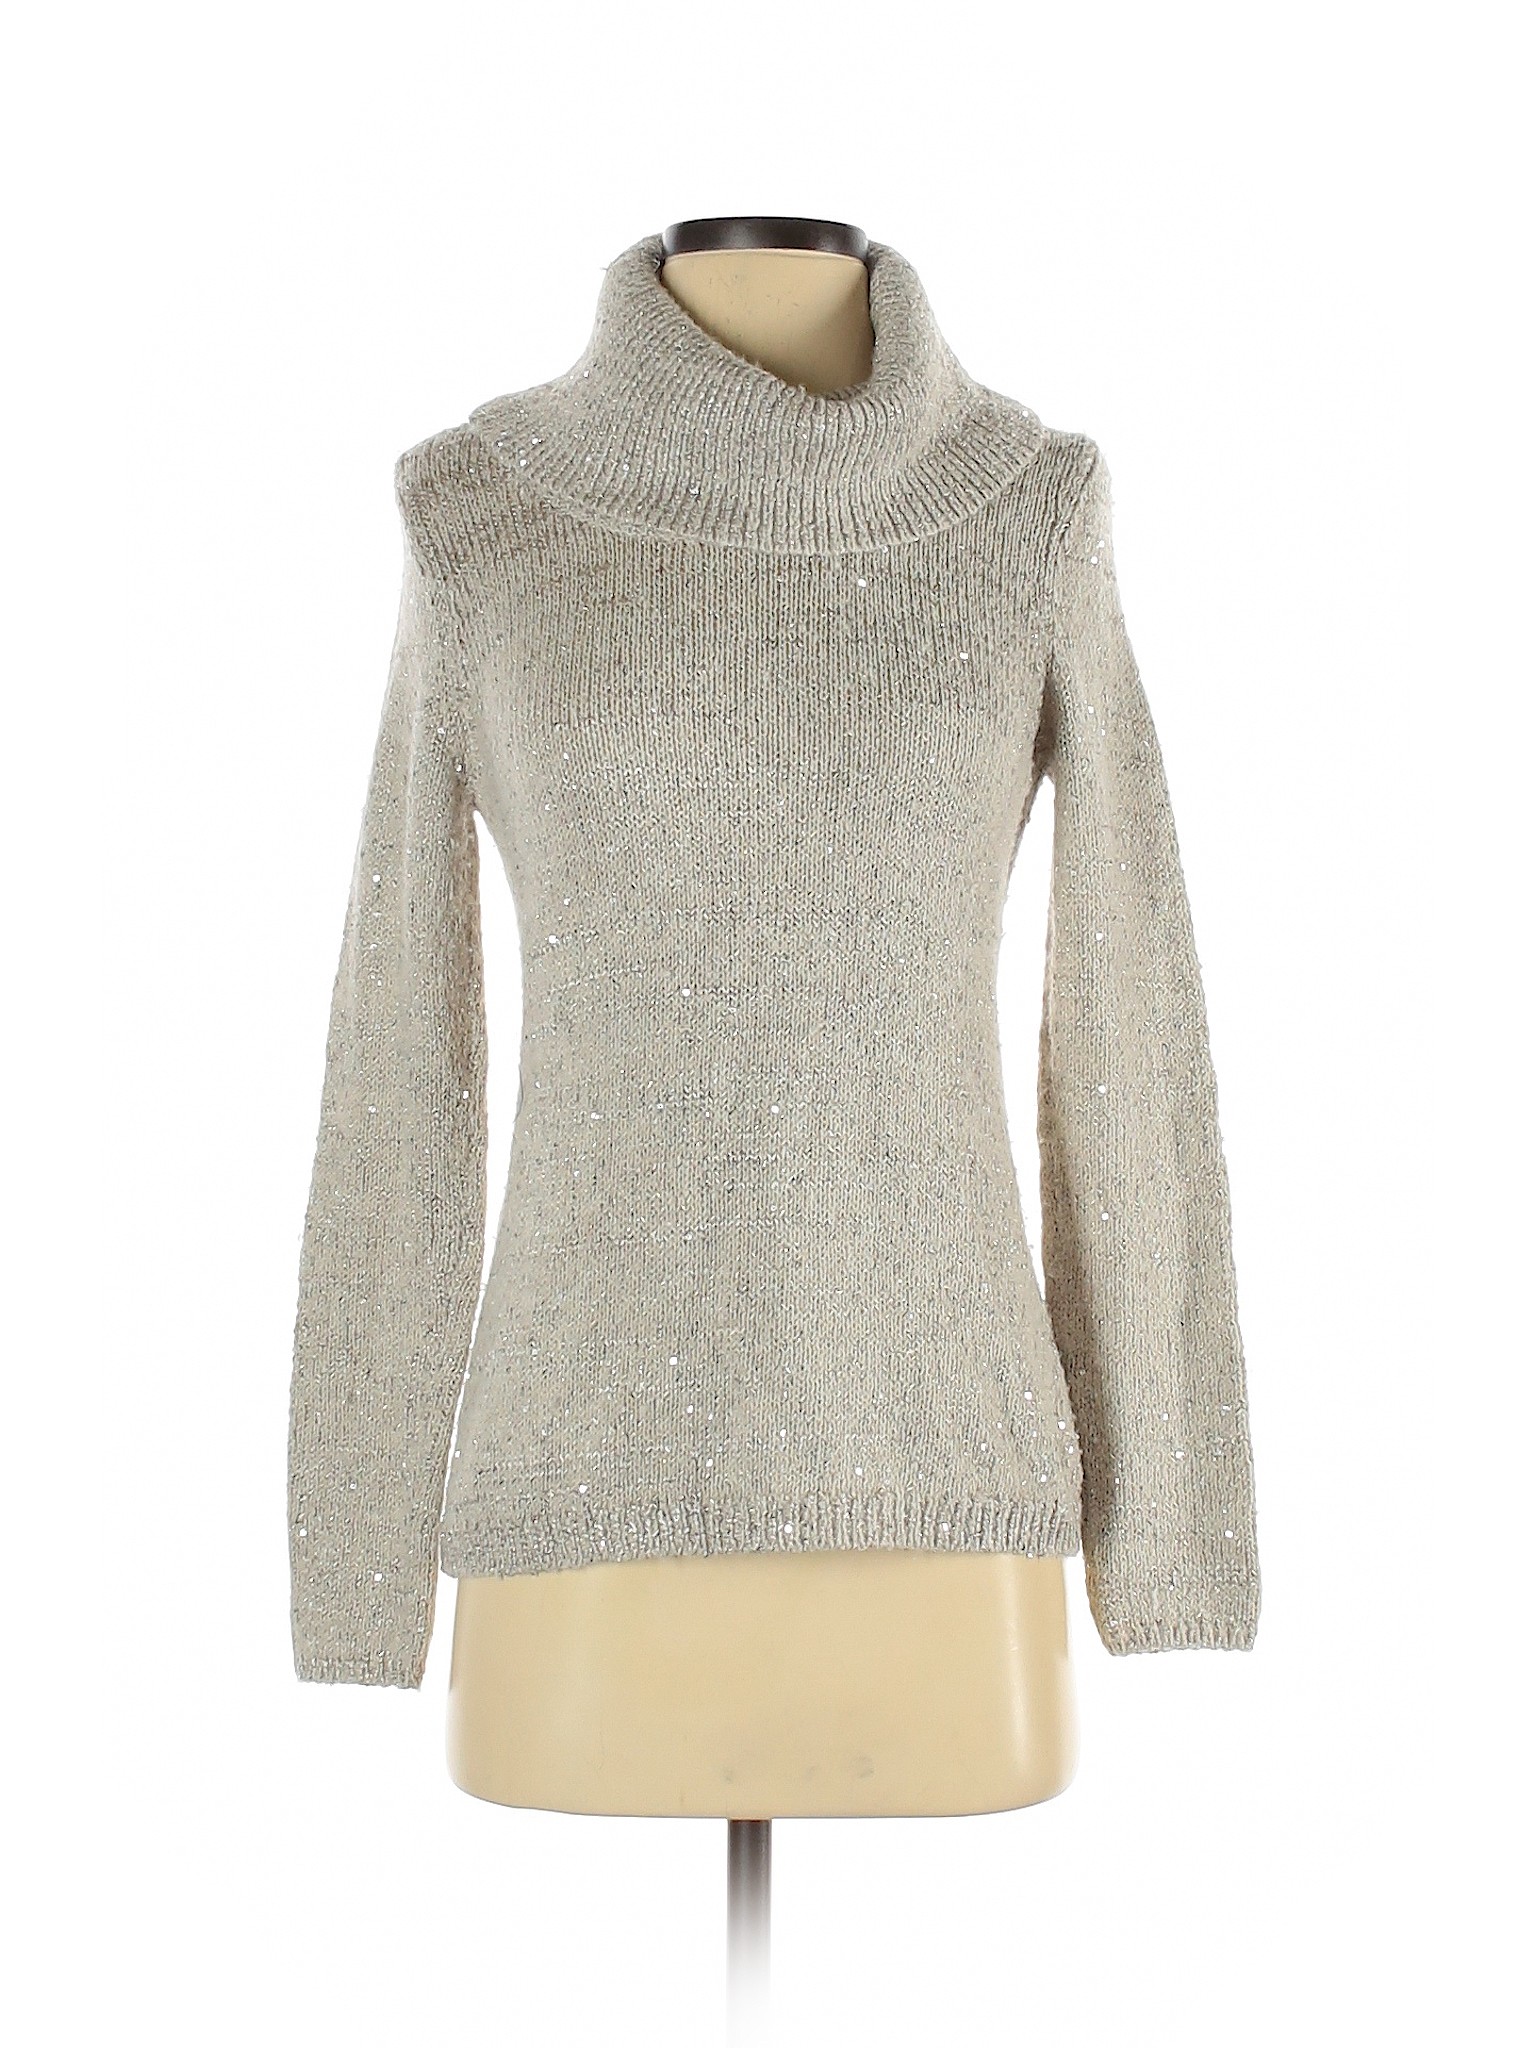 White House Black Market Women Gray Pullover Sweater XS | eBay